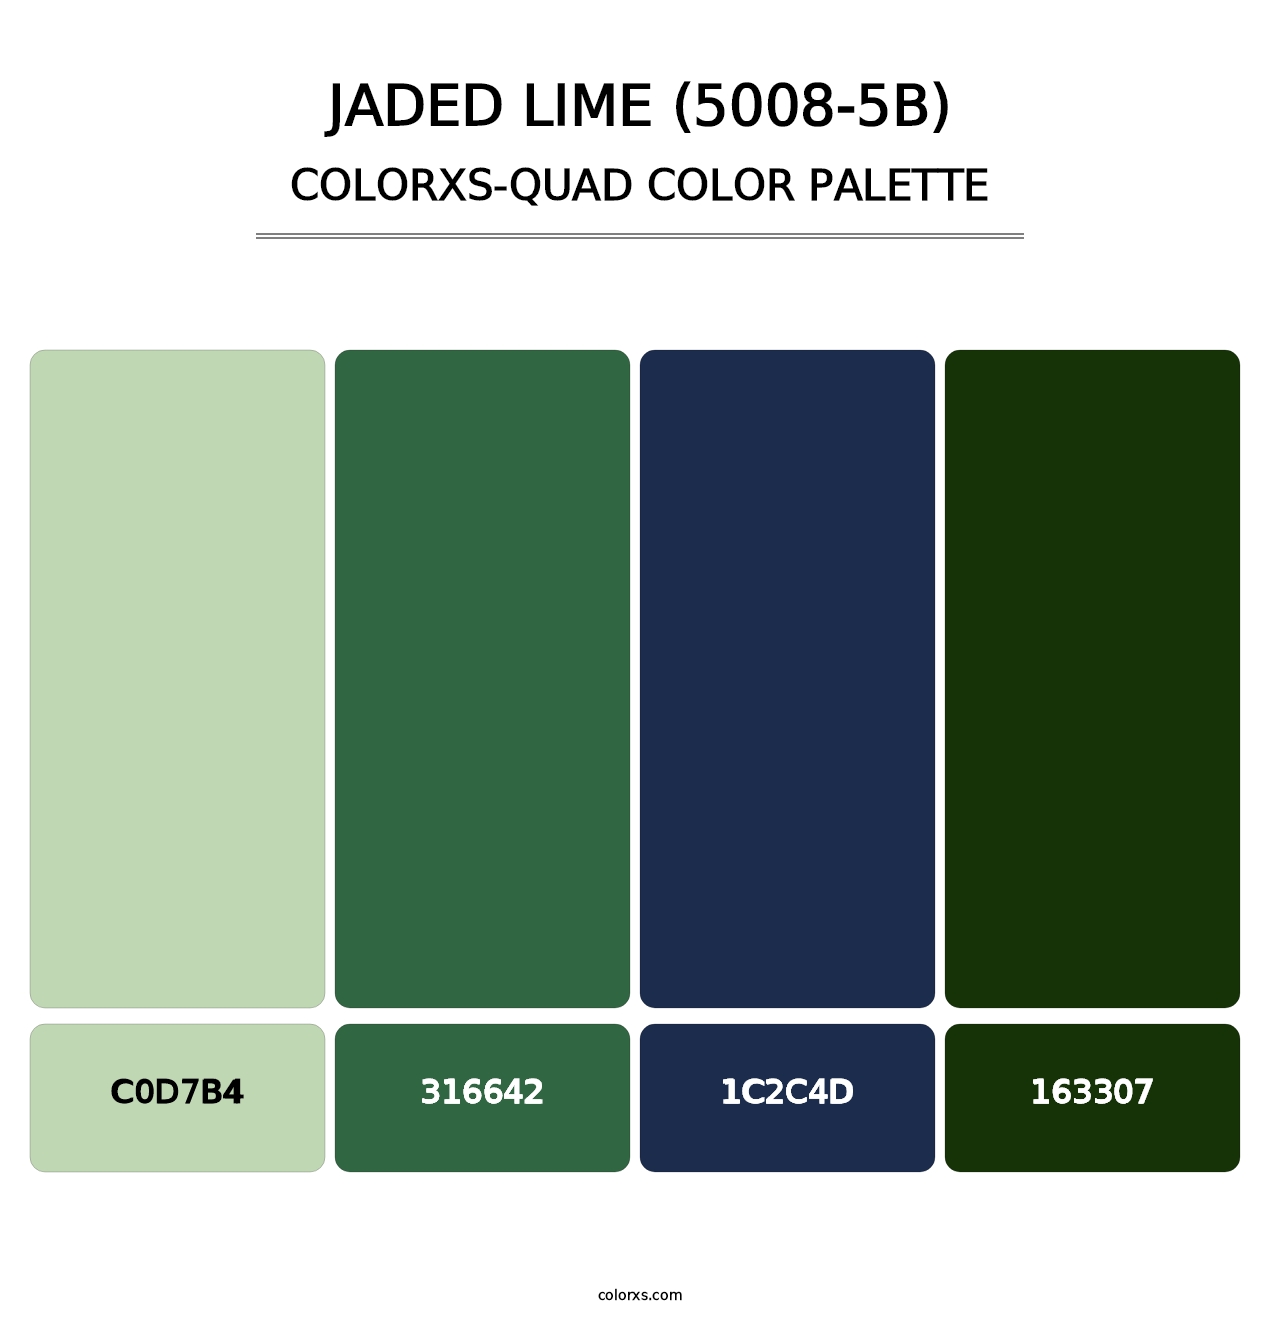 Jaded Lime (5008-5B) - Colorxs Quad Palette